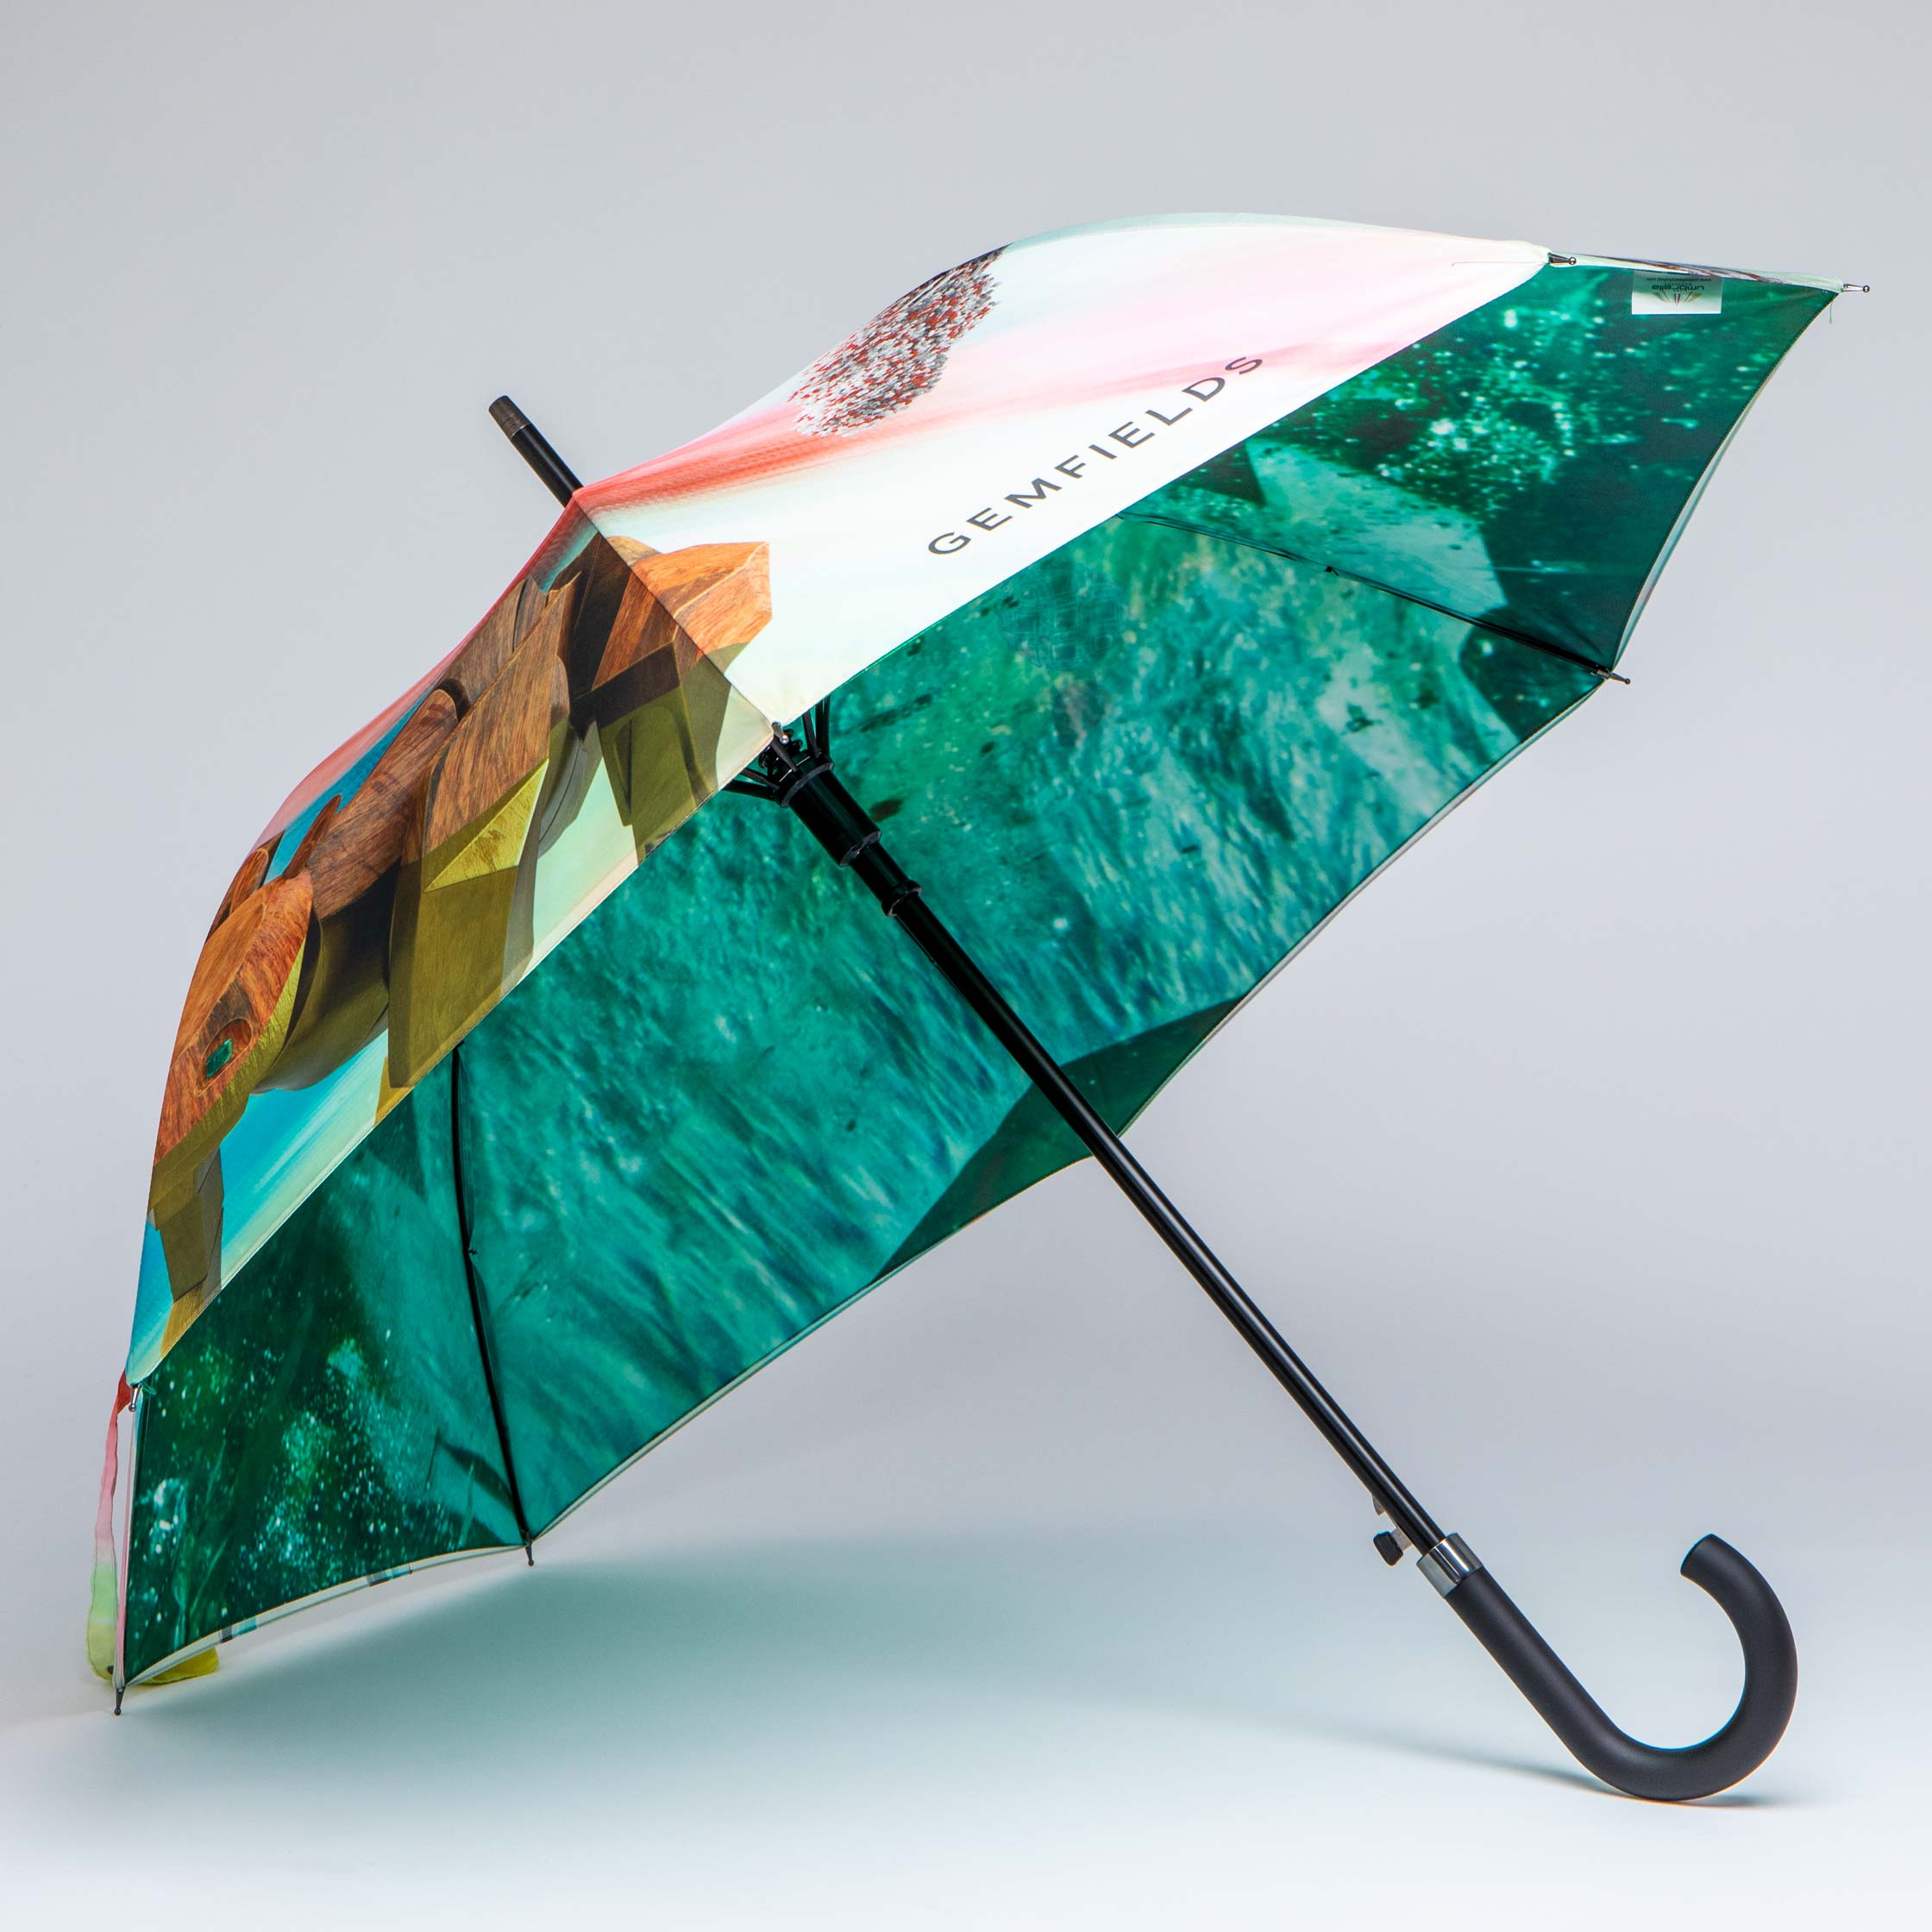 a company makes travel umbrellas